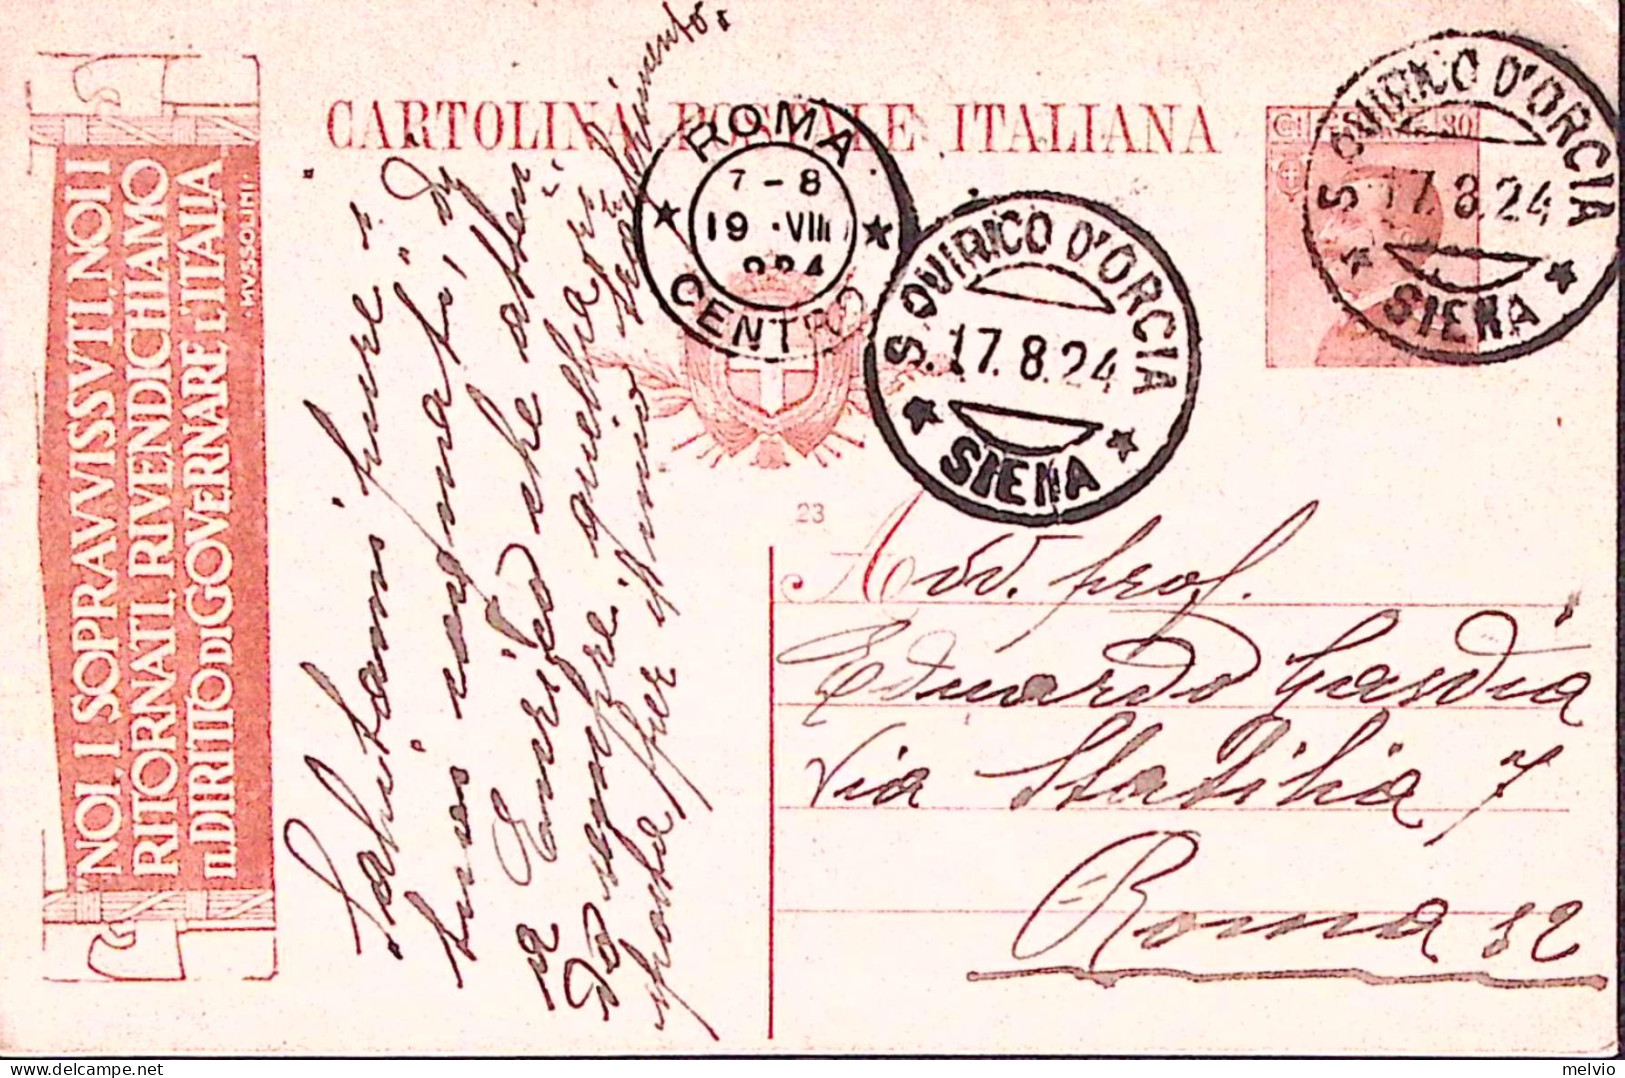 1924-CARTOLINA POSTALE C.30 Noi I Sopravvissuti (SU TRE RIGHE) Viaggiata S. Quir - Stamped Stationery